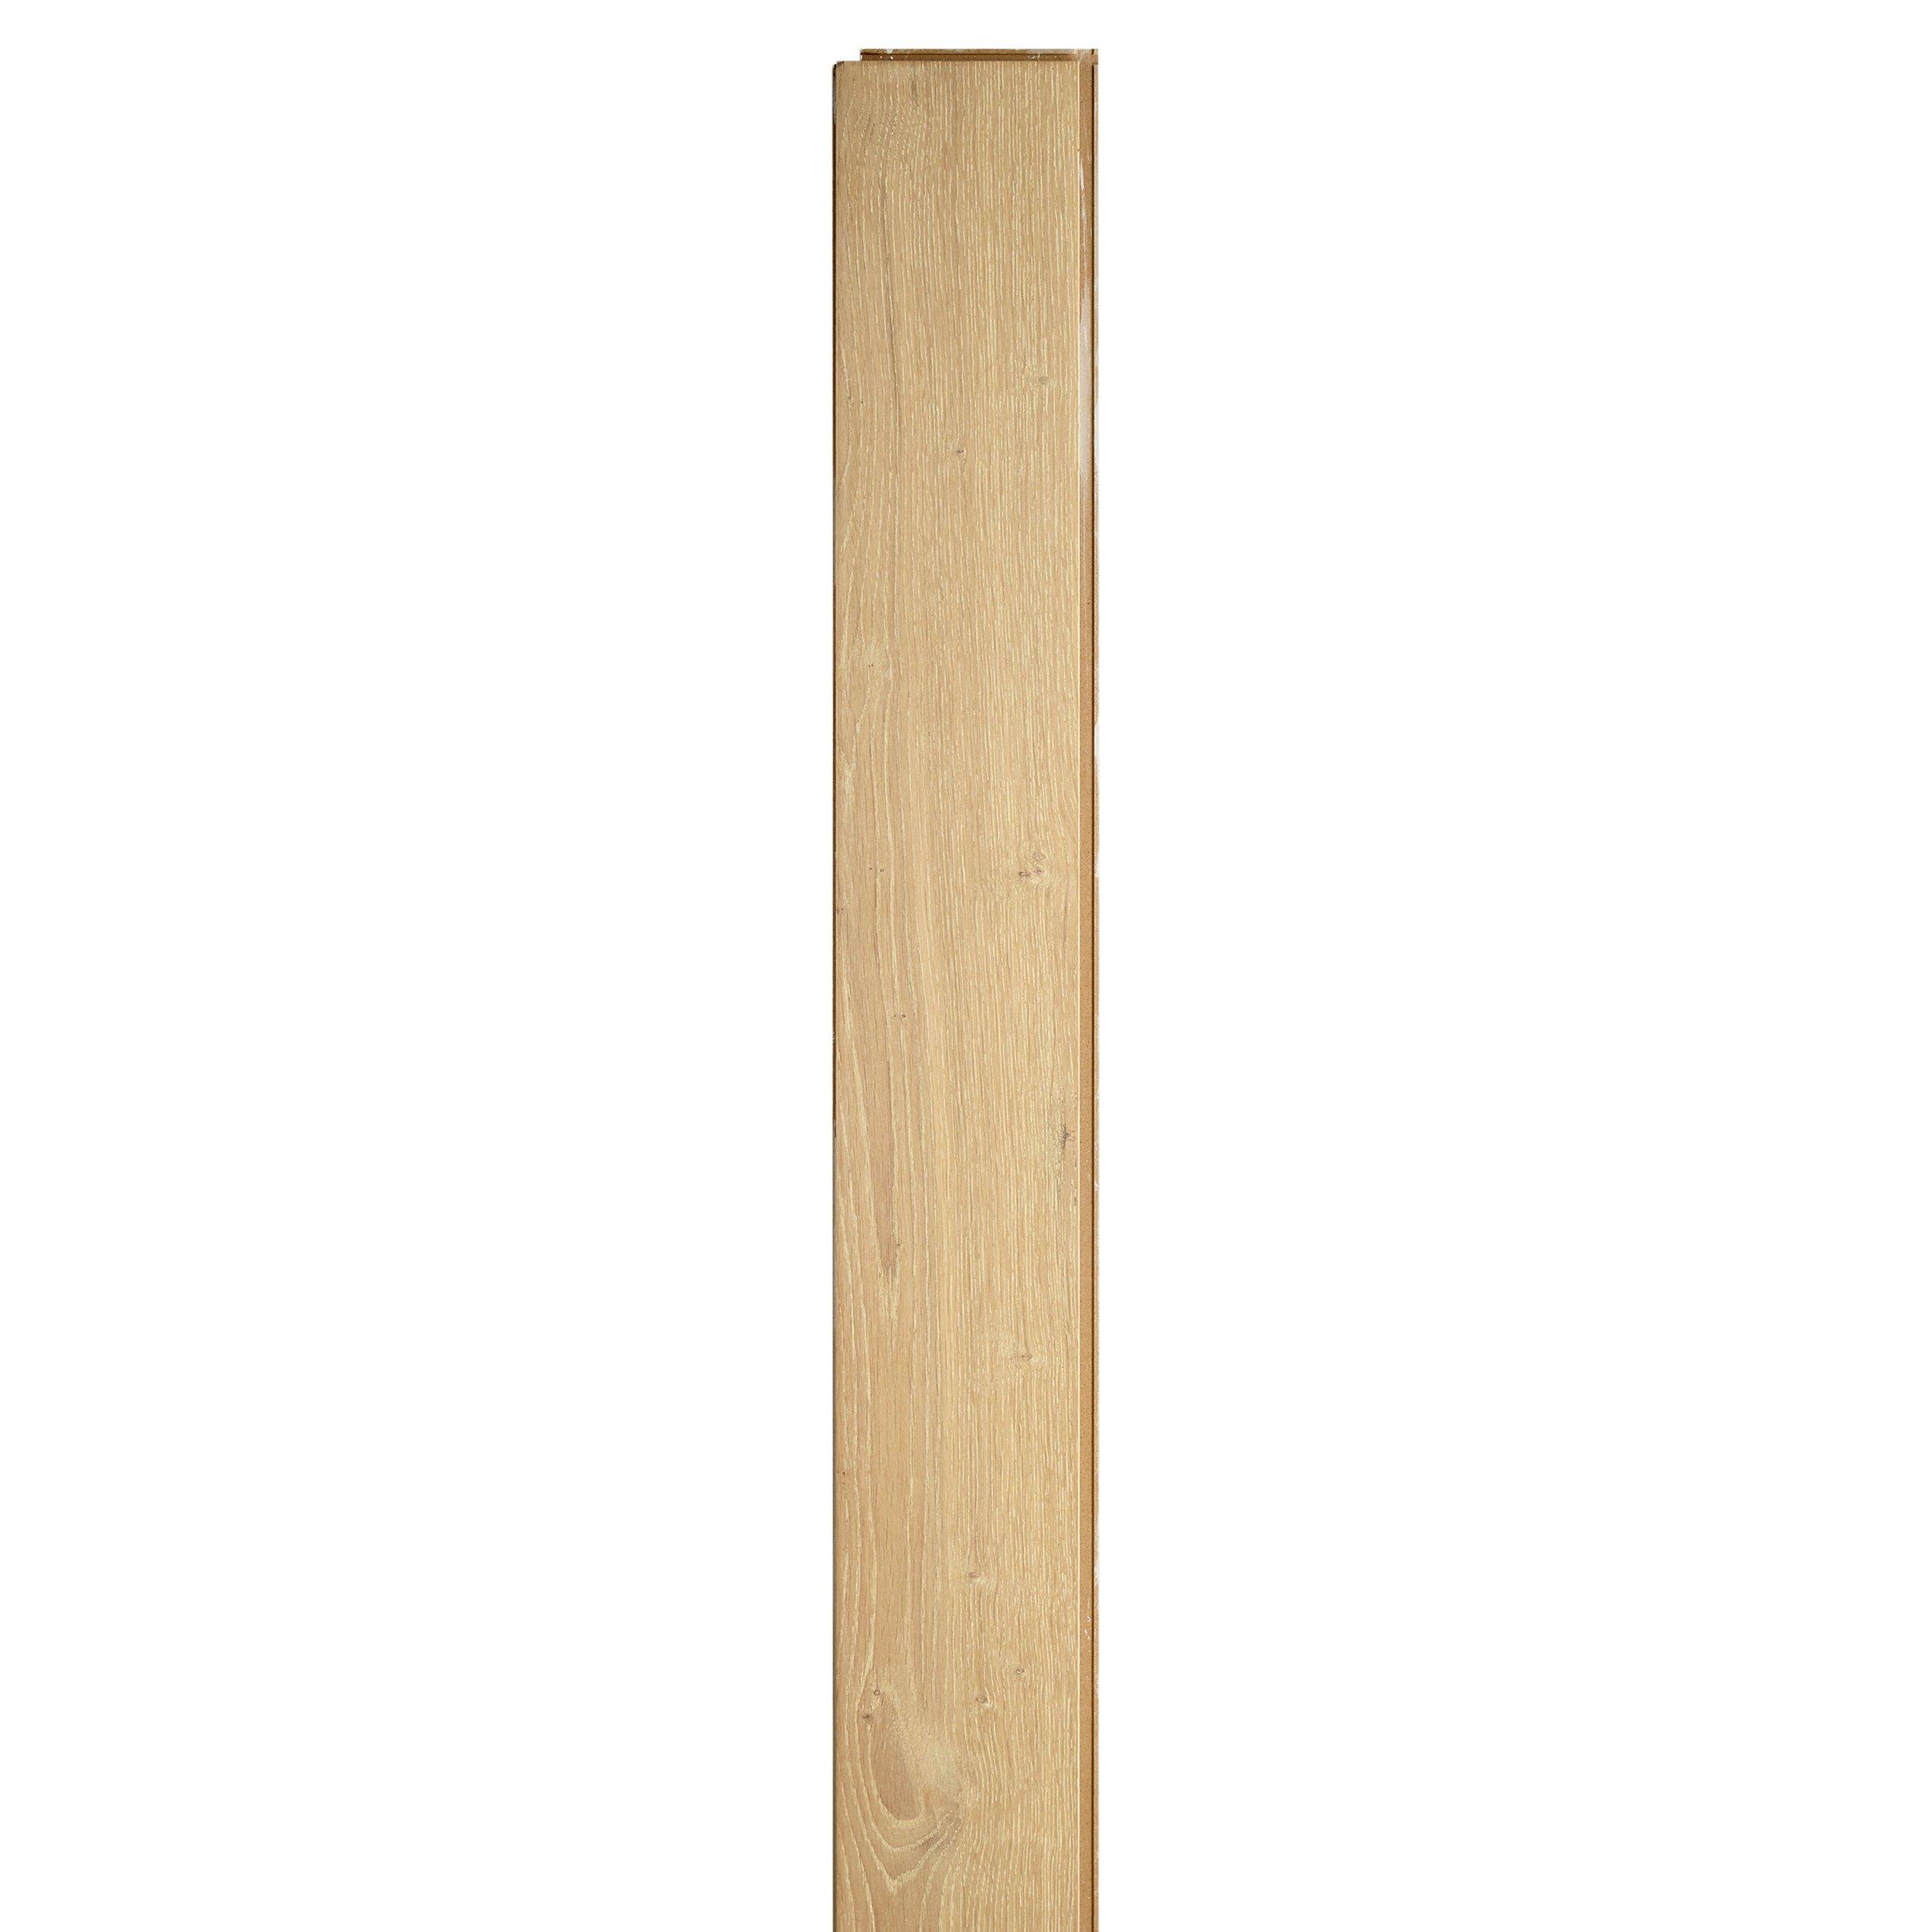 Devyn White Oak Wire-Brushed Engineered Hardwood